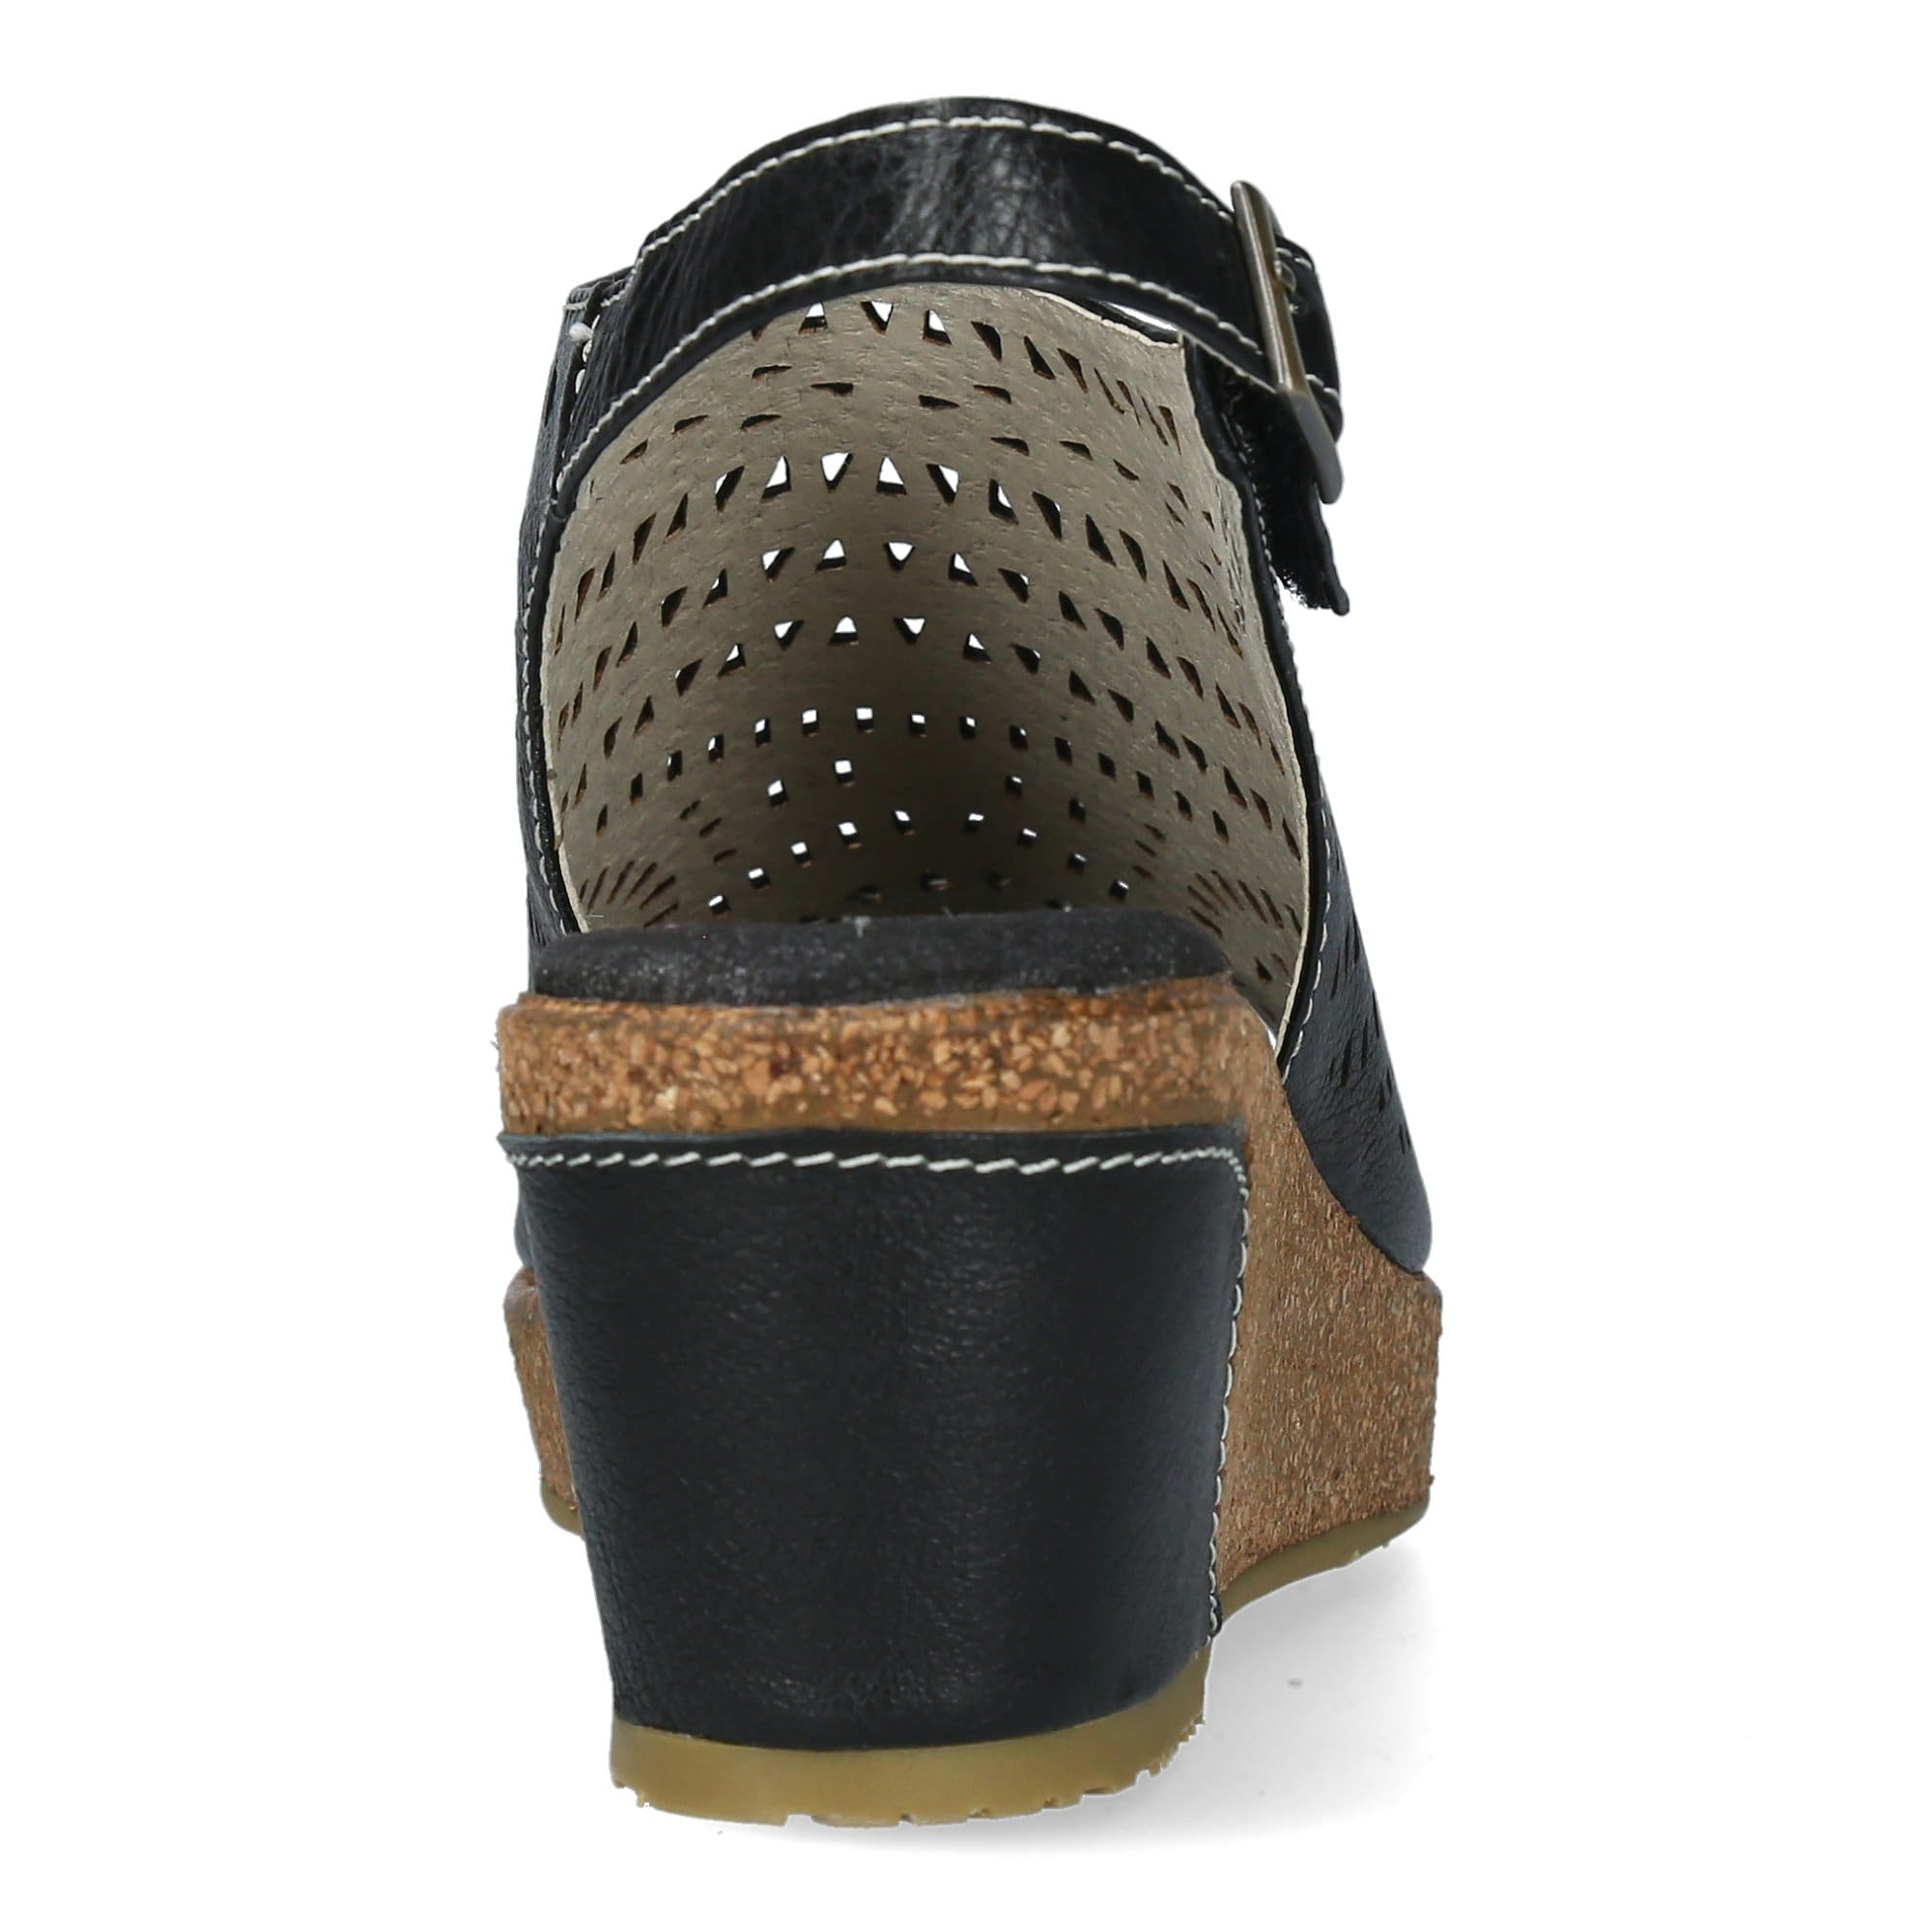 Scarpe HACLEO 10 - Sandalo